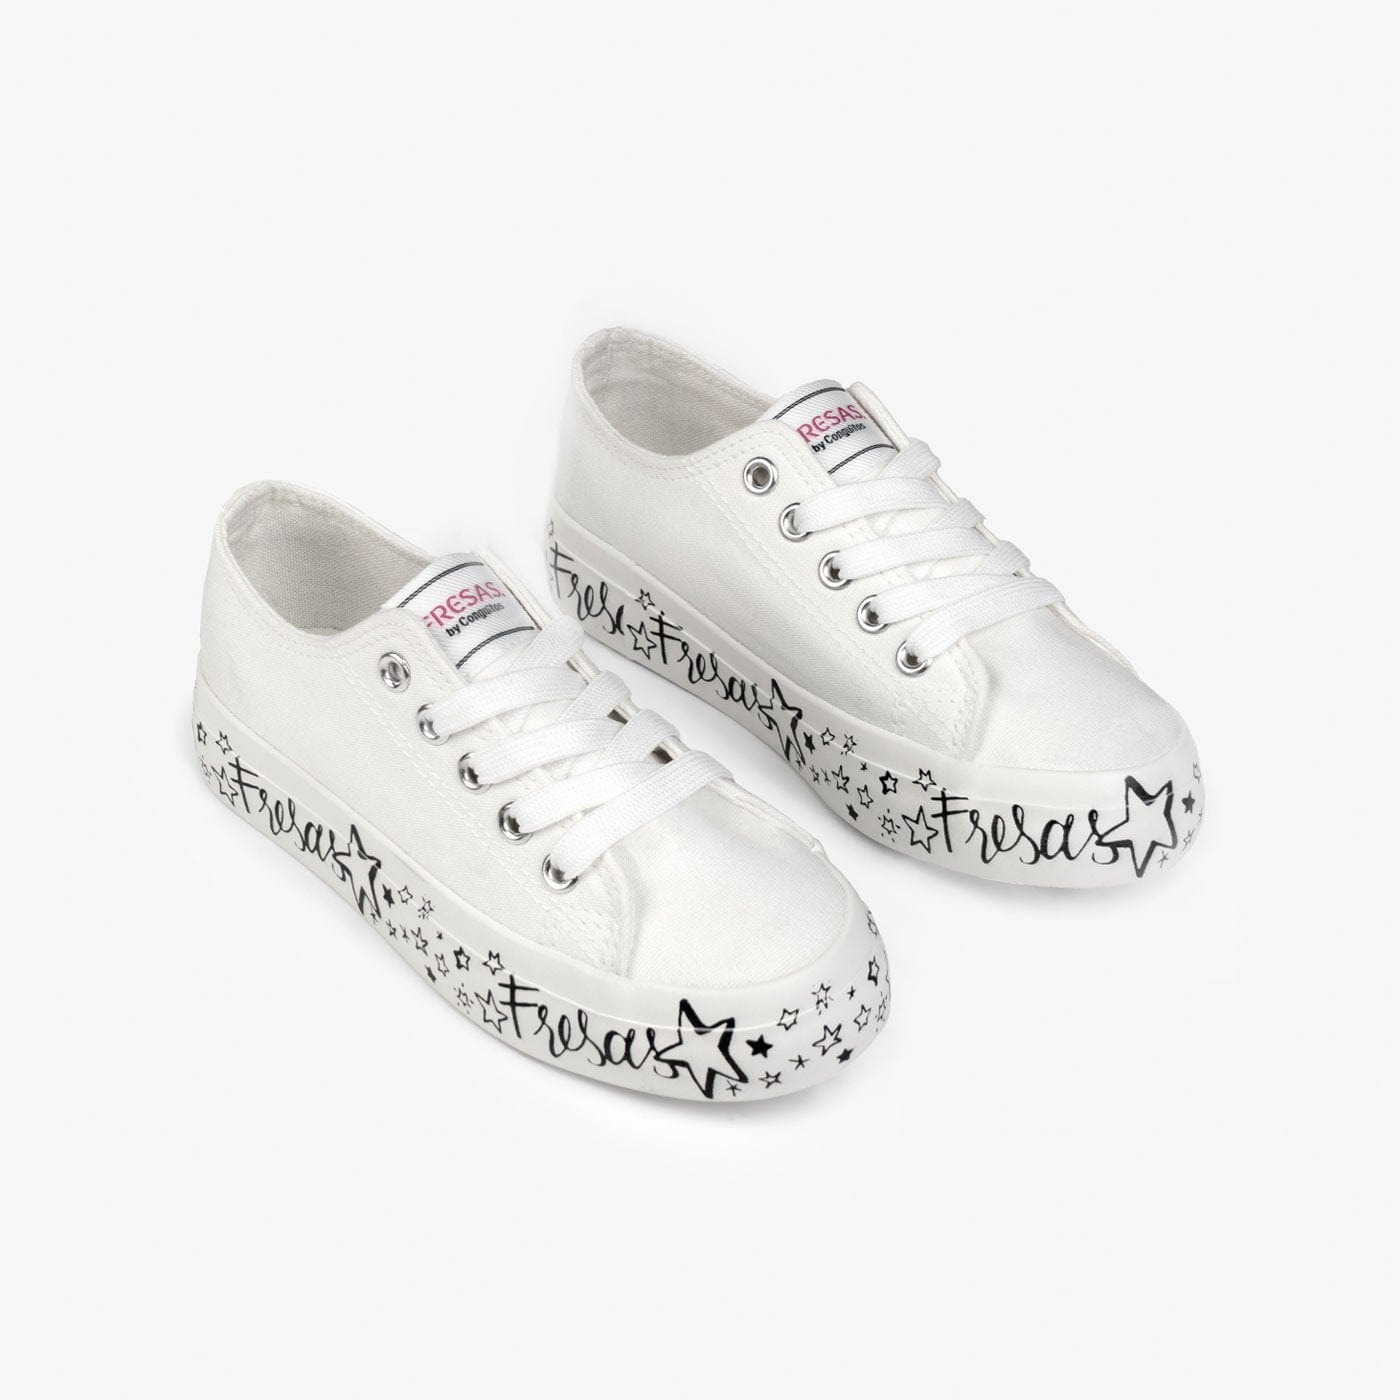 FRESAS CON NATA Shoes Girl's White Printed Canvas Sneakers